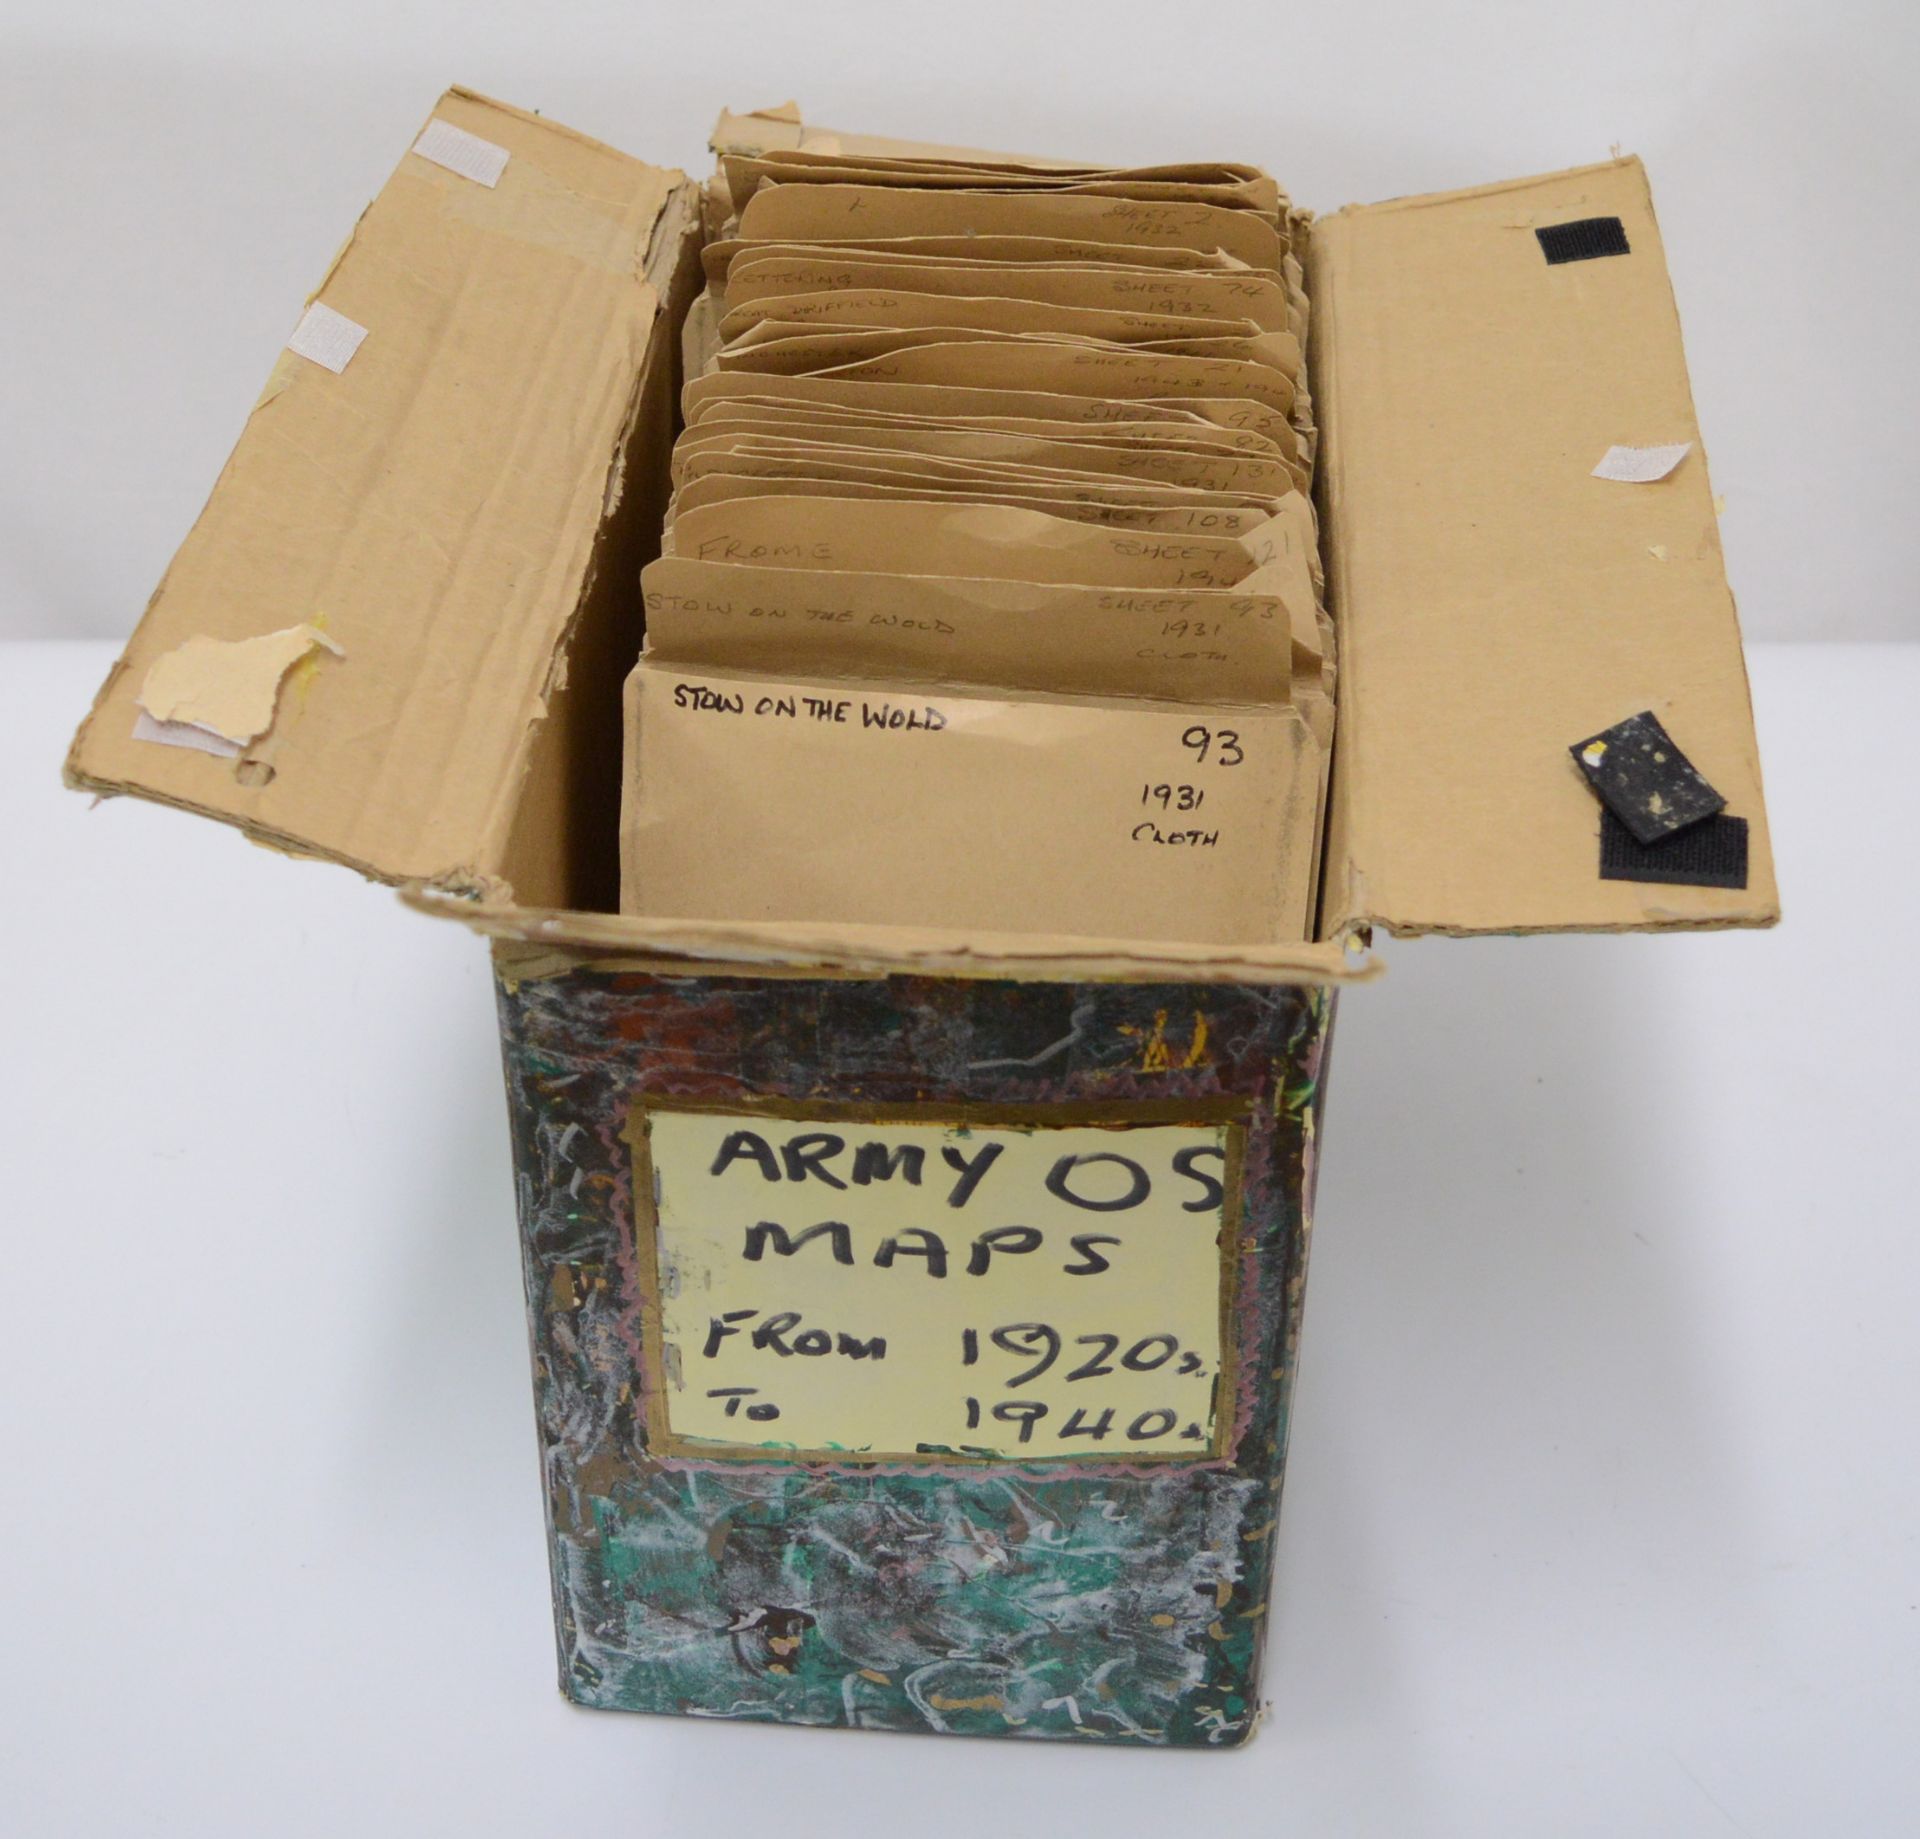 29x Army OS Maps 1920s to 1940s - inc Kettering & Huntingdon, Alnwick & Rothbury.